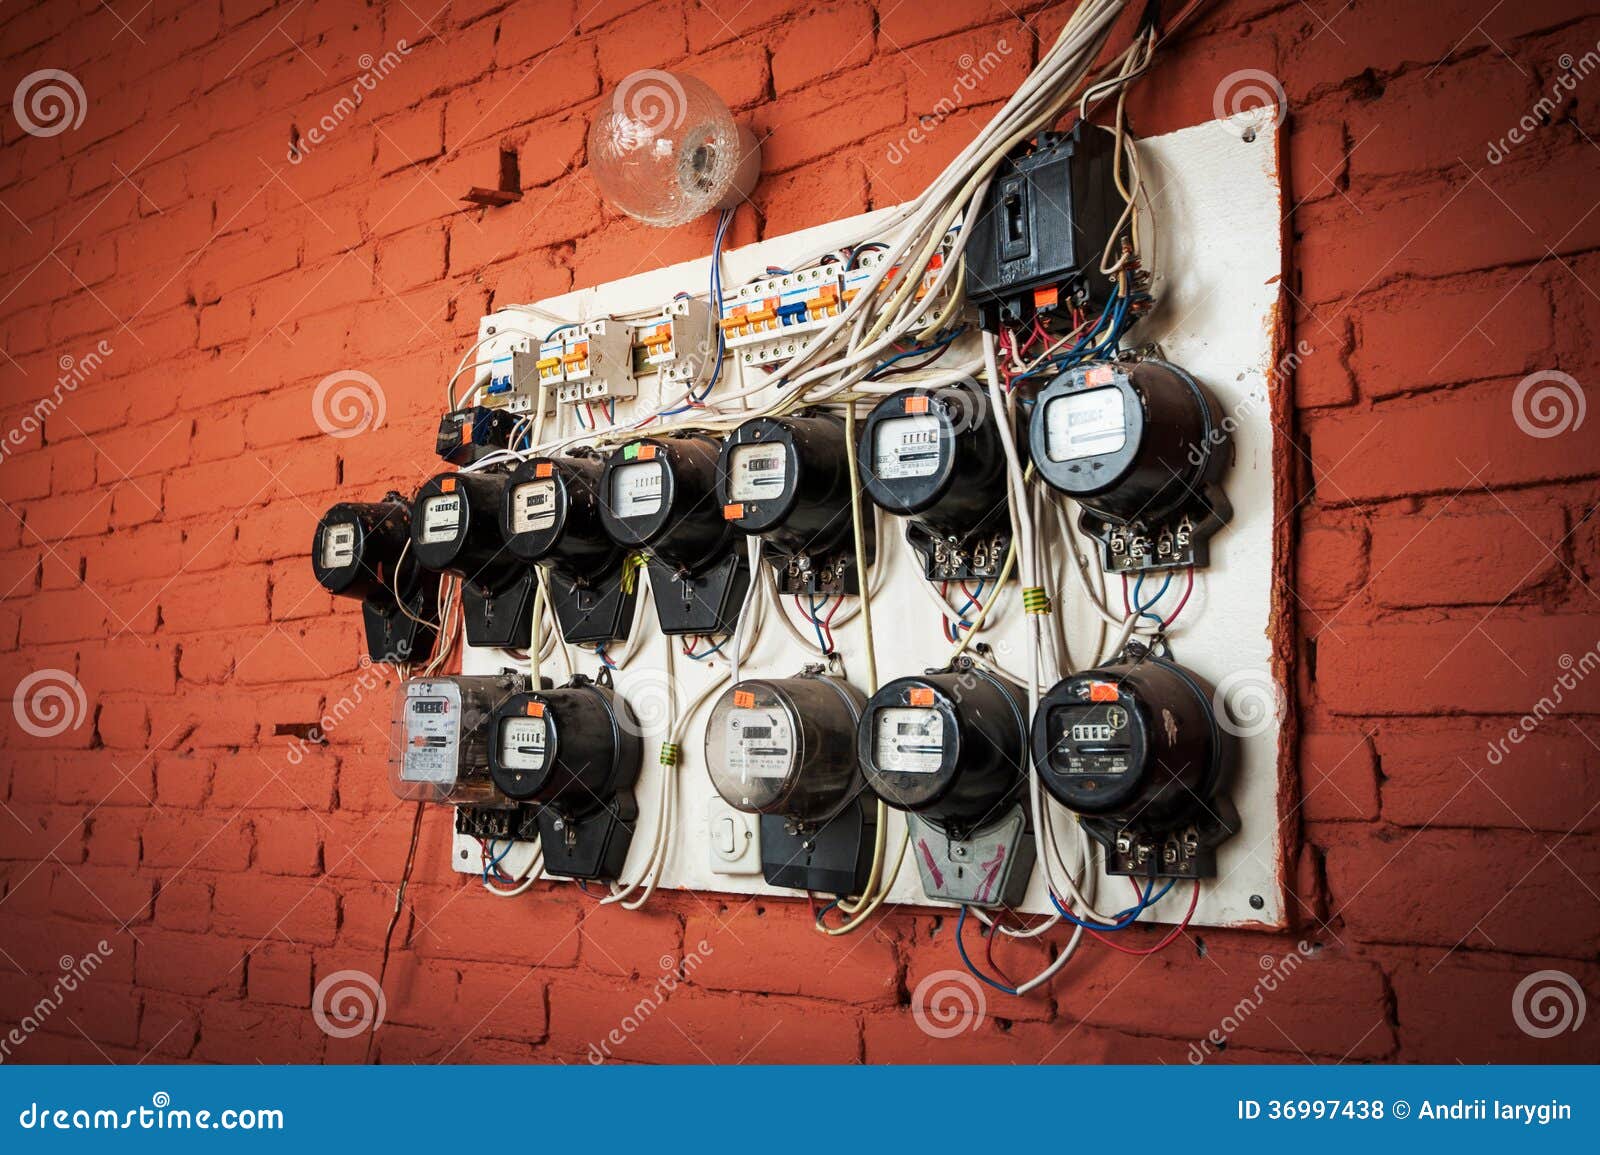 old electric meters